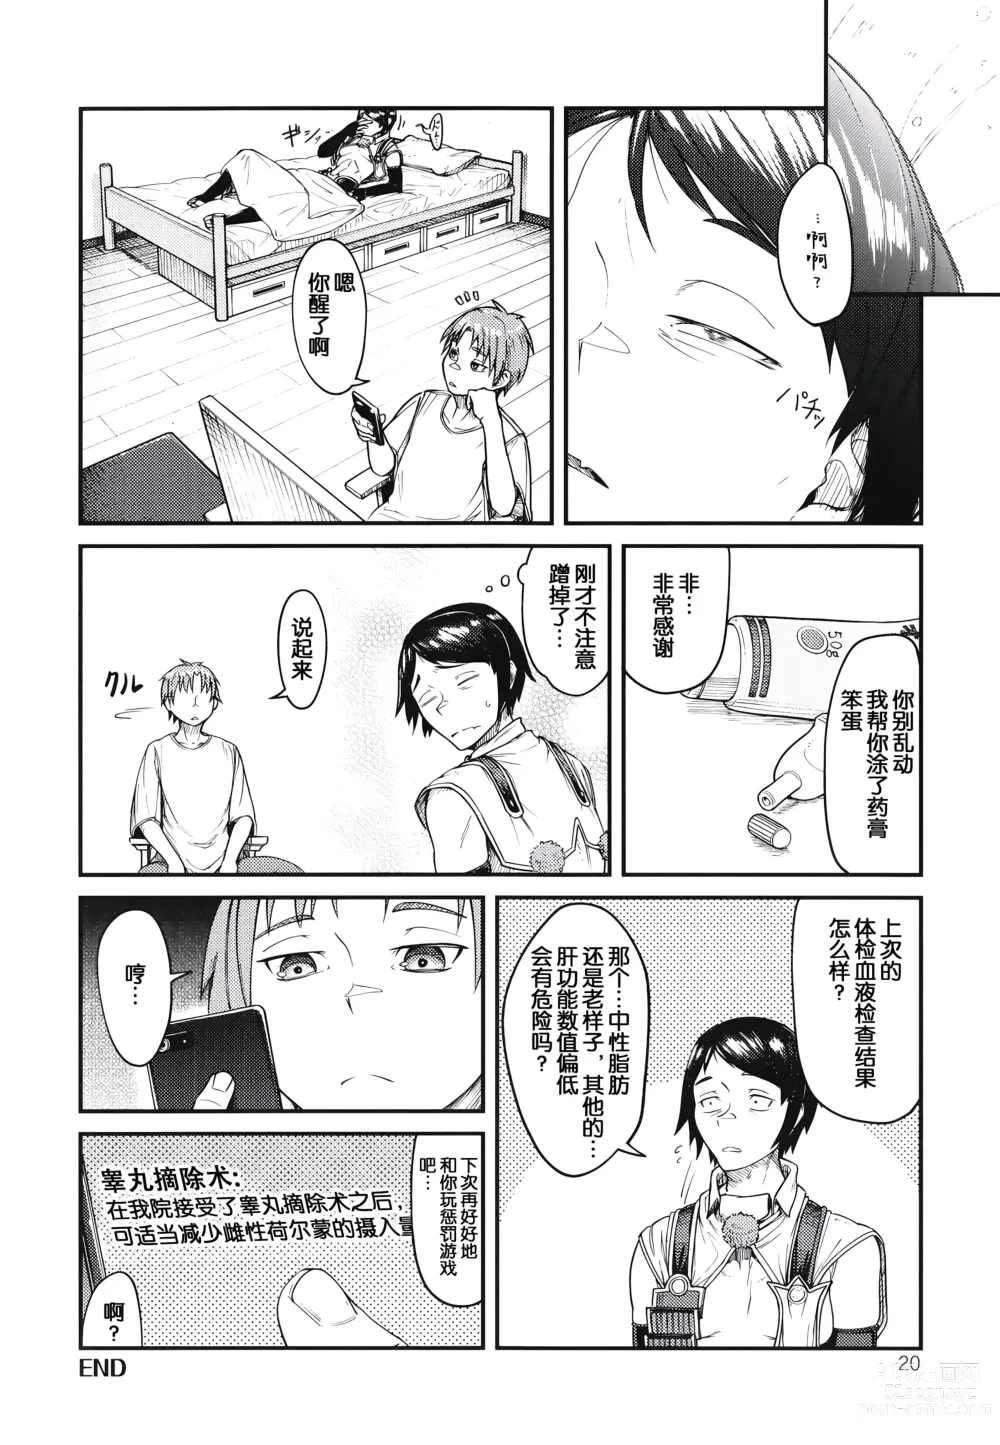 Page 21 of doujinshi MHD-01